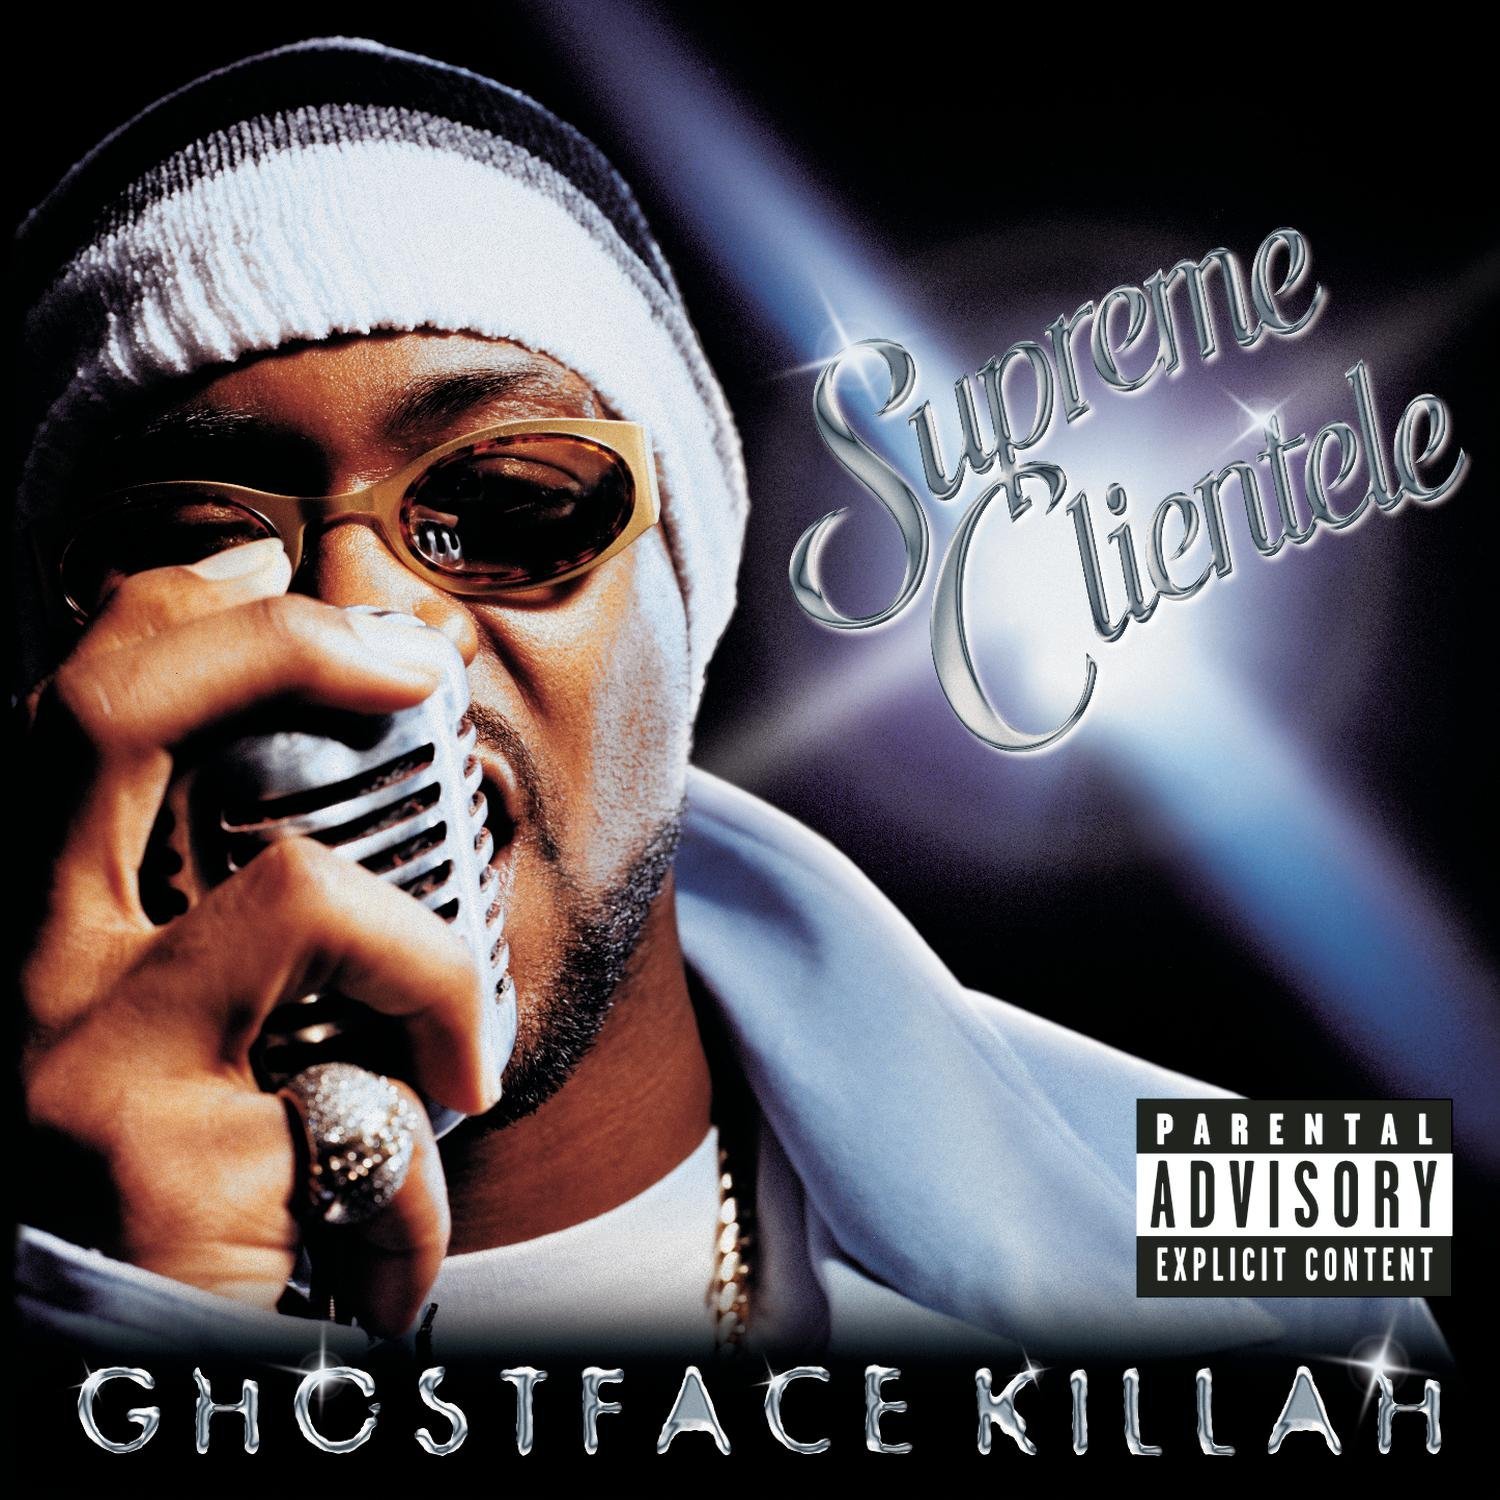 Ghostface Killah Supreme Clientele